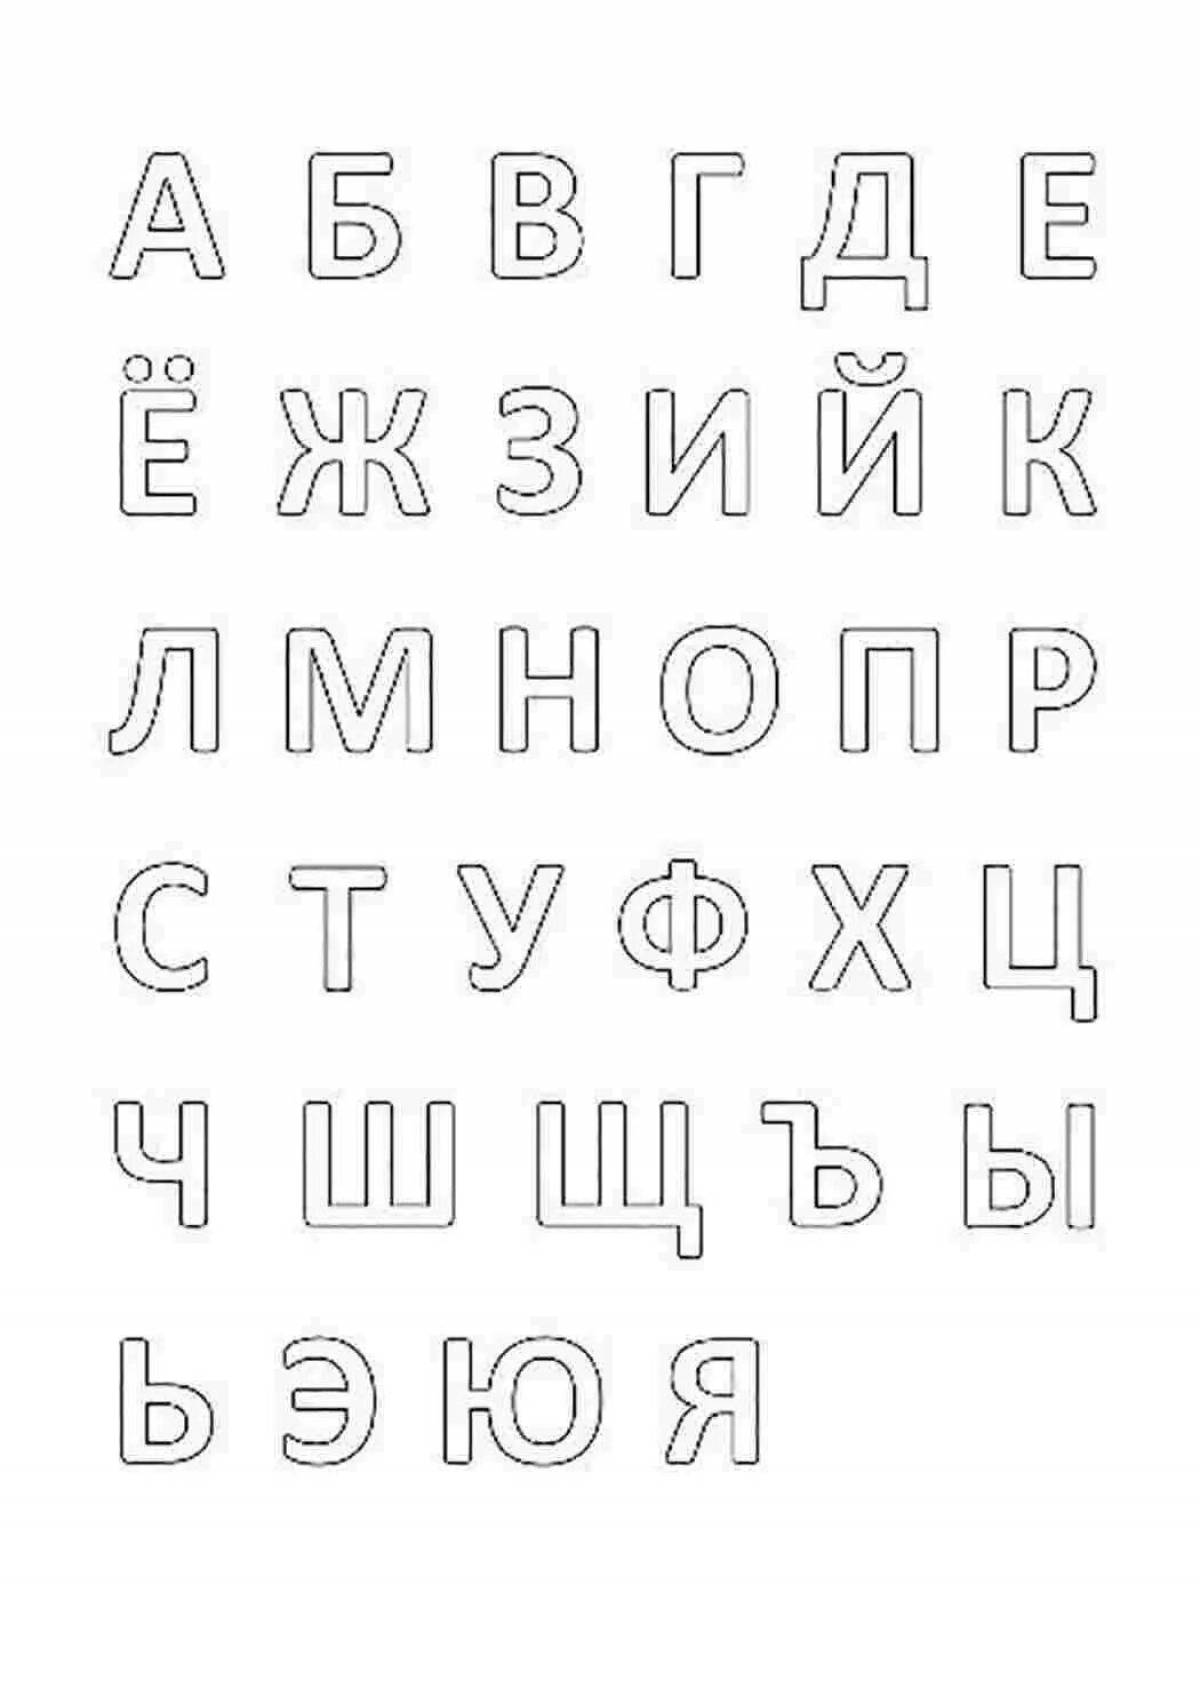 Playful Russian alphabet coloring book